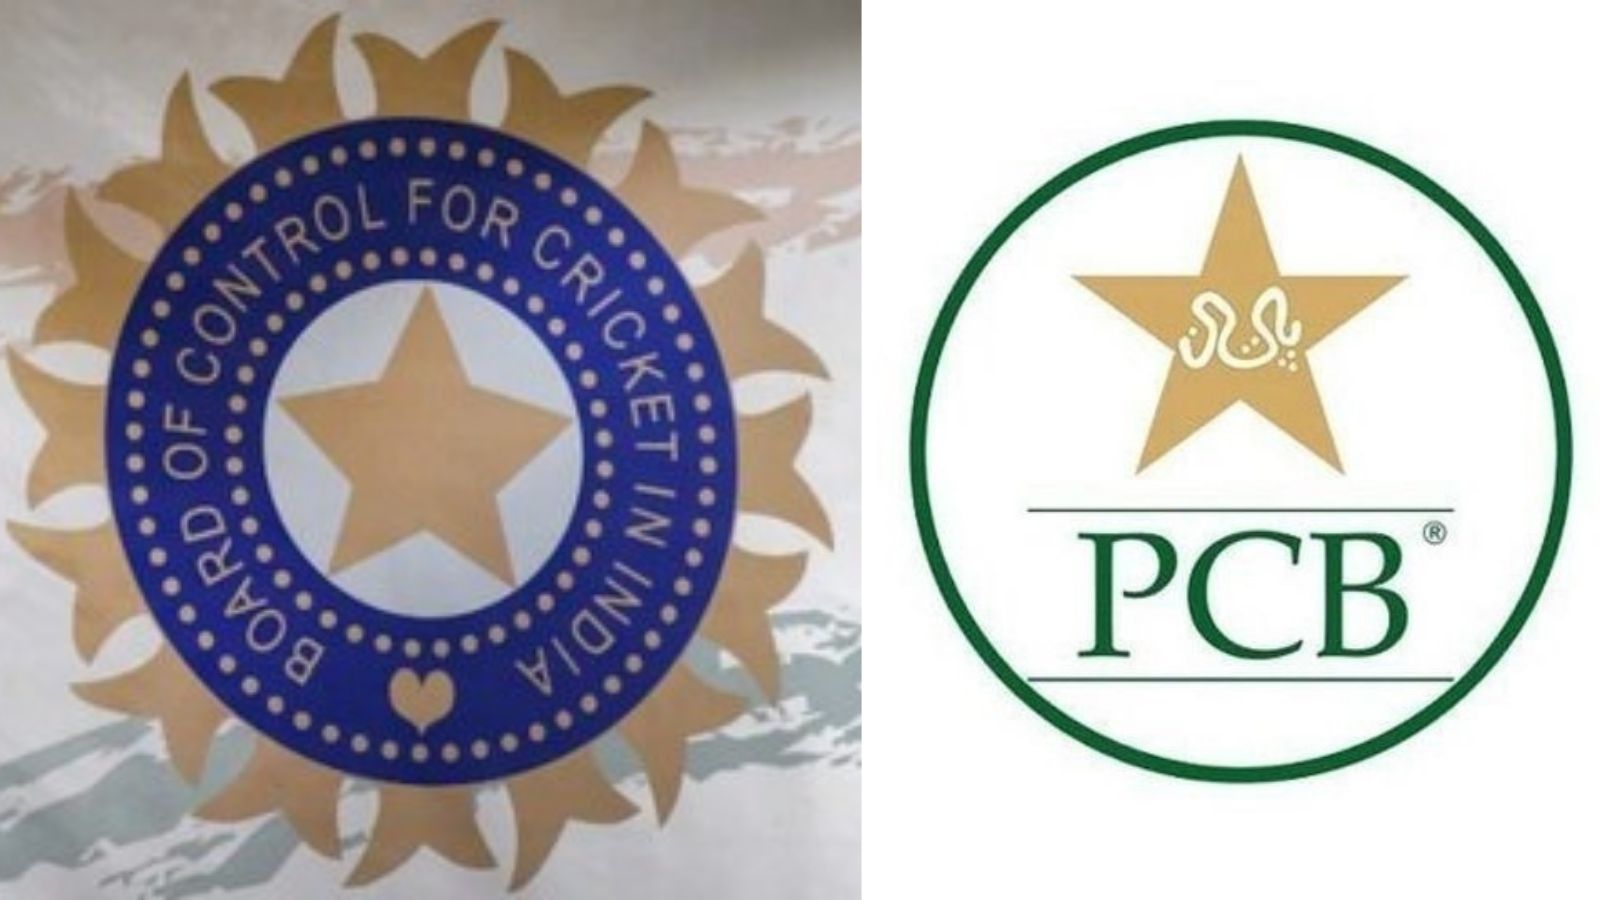 PCB logo free png | Pakistan Cricket Board free transparent png